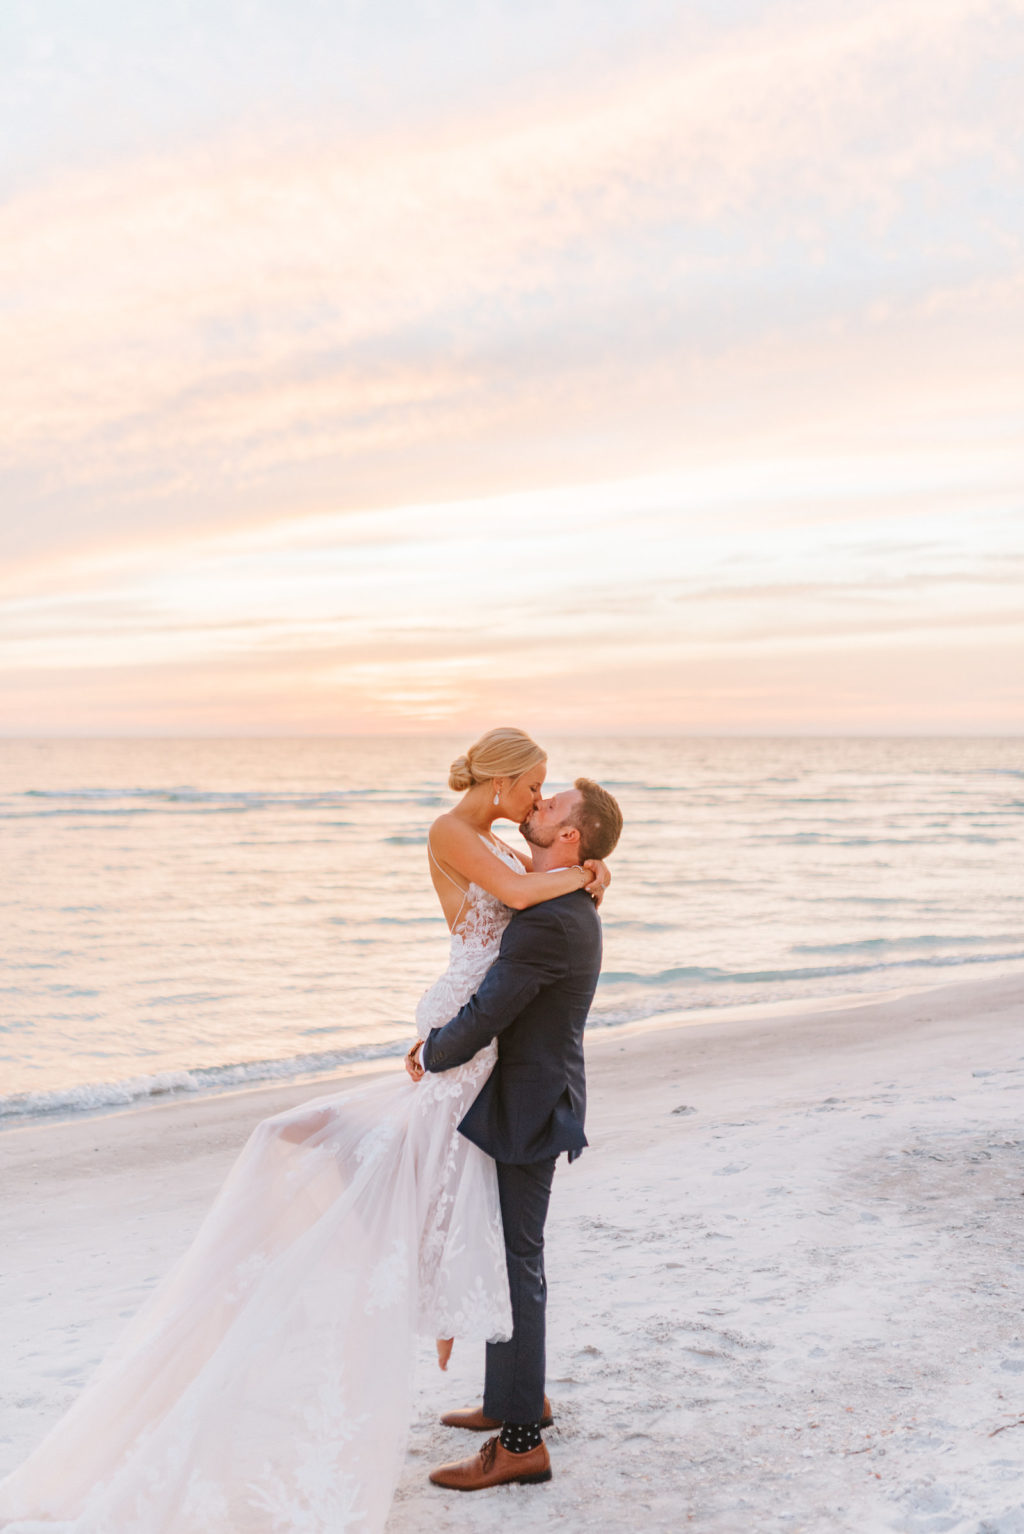 Romantic Florida Bride and Groom Kissing on Beach During Sunset | Sarasota Wedding Venue The Resort at Longboat Key Club